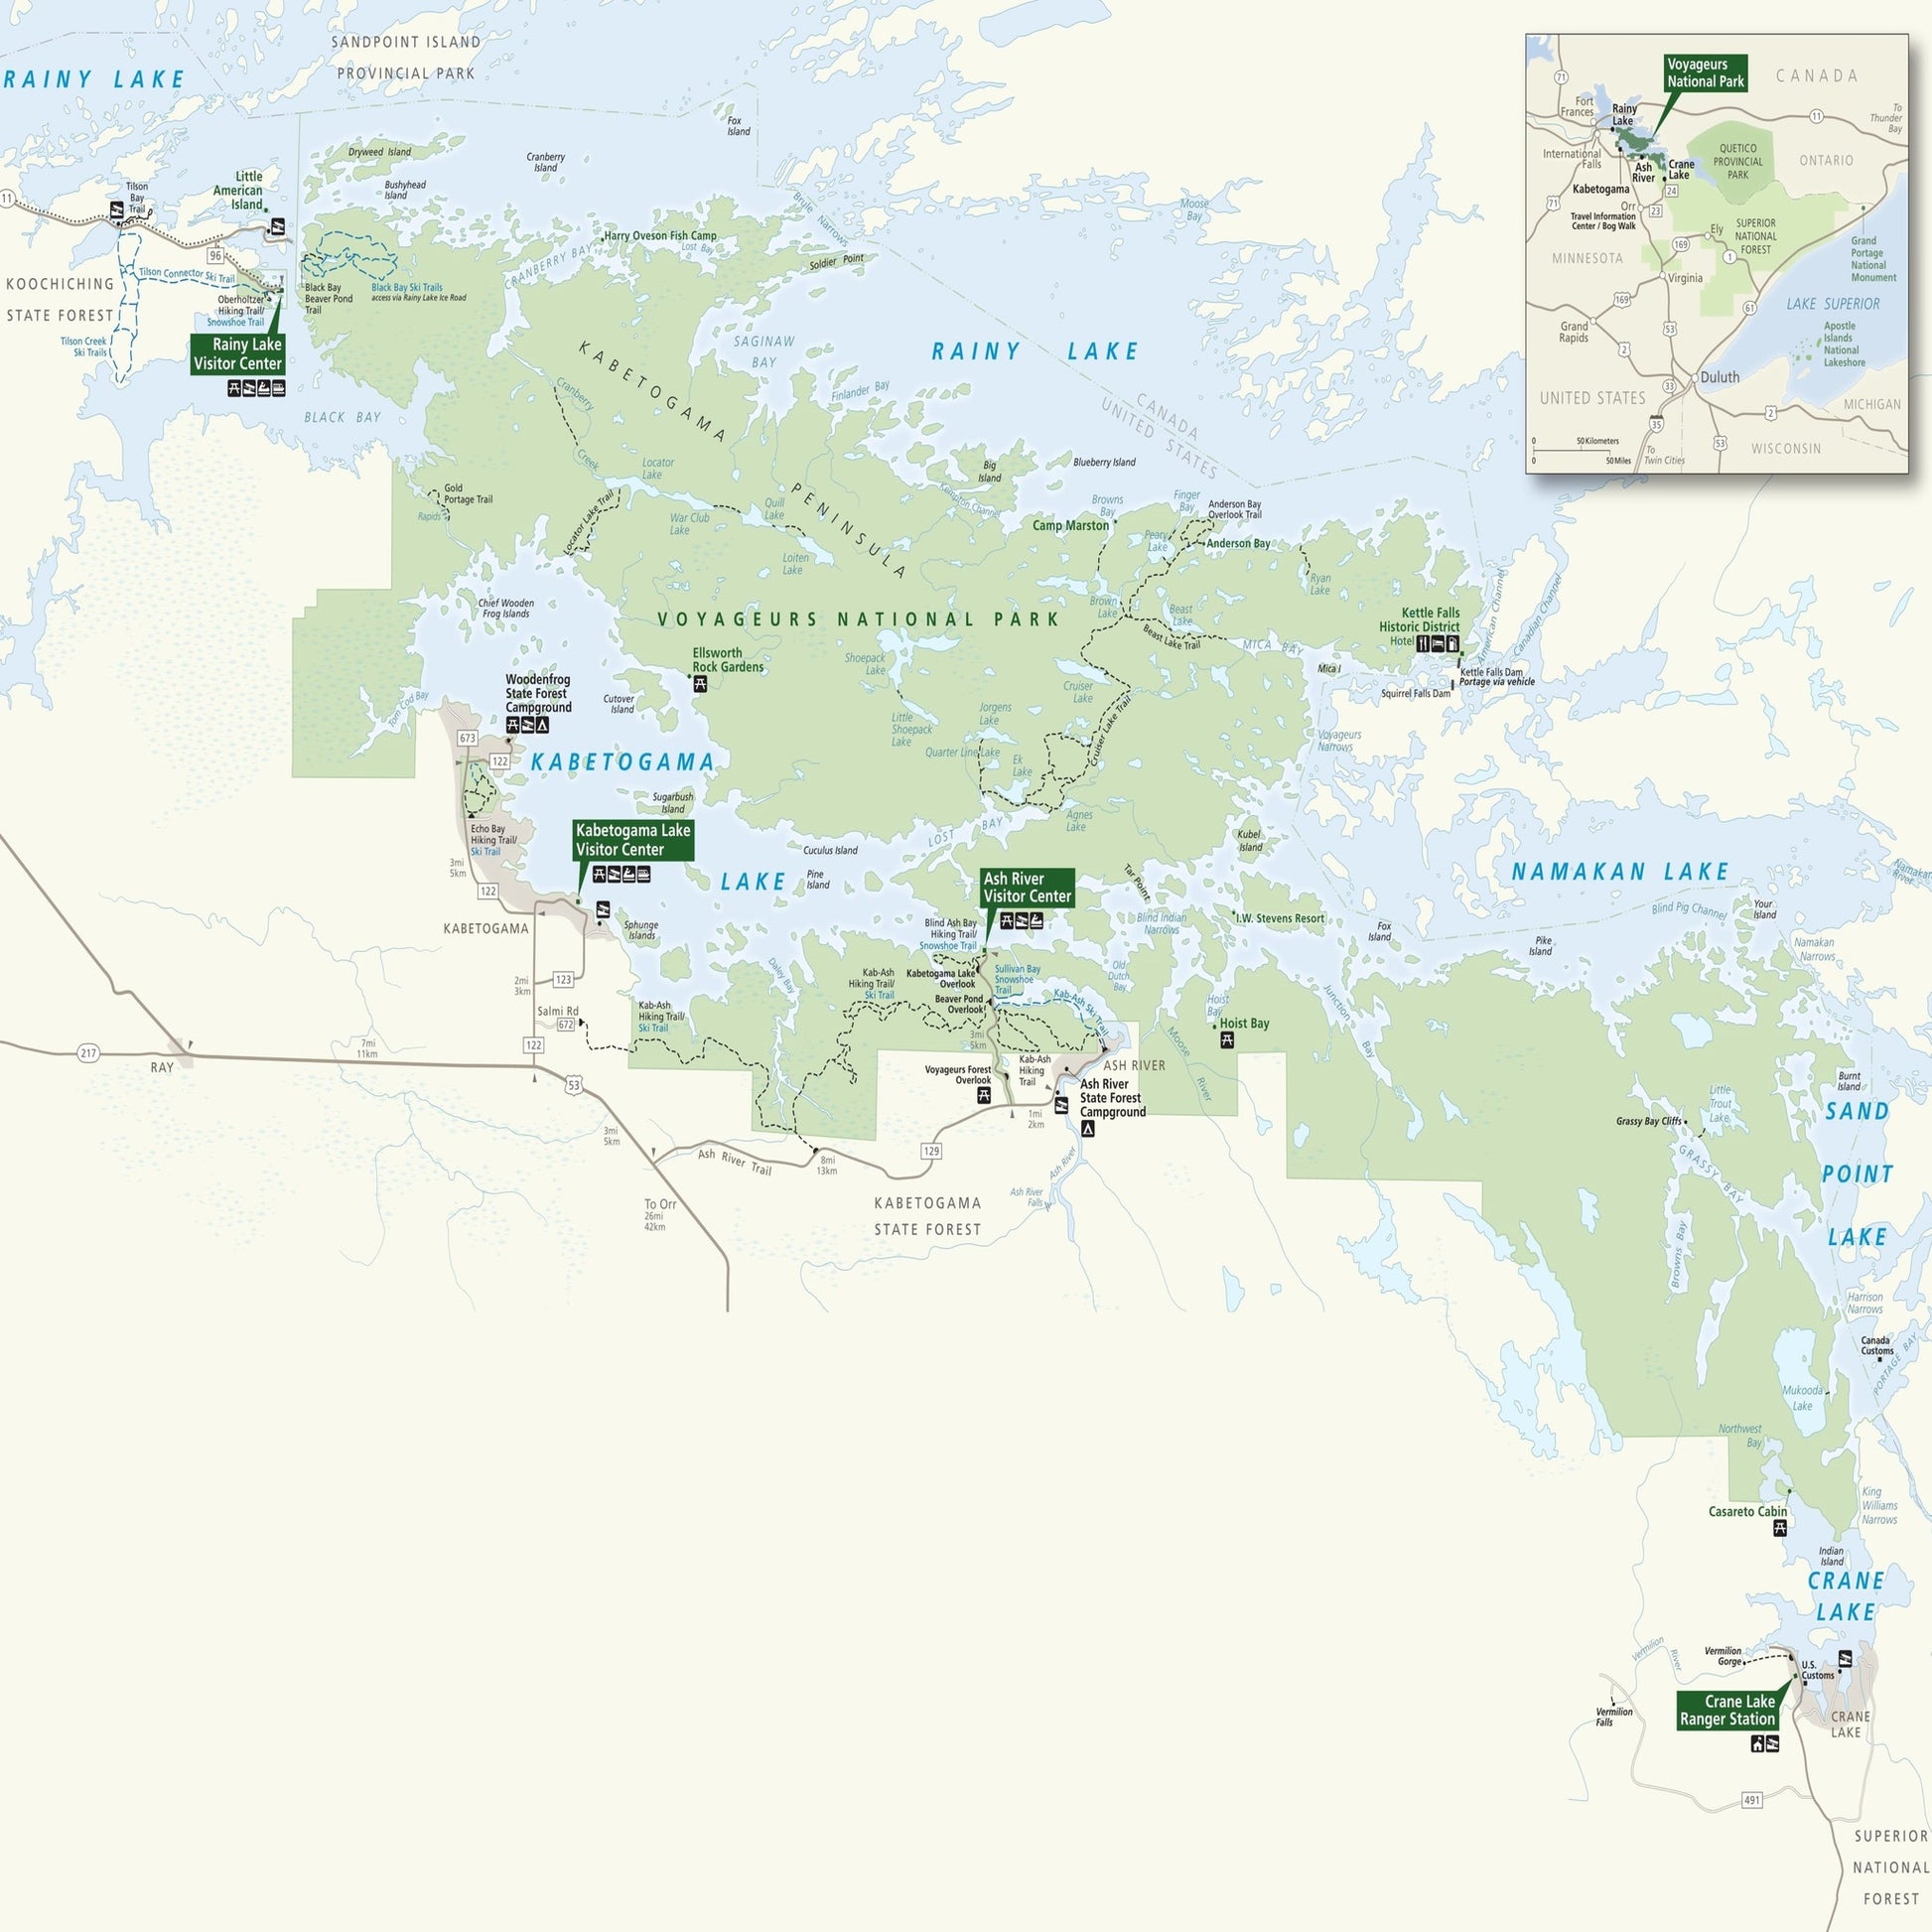 voyageurs national park map